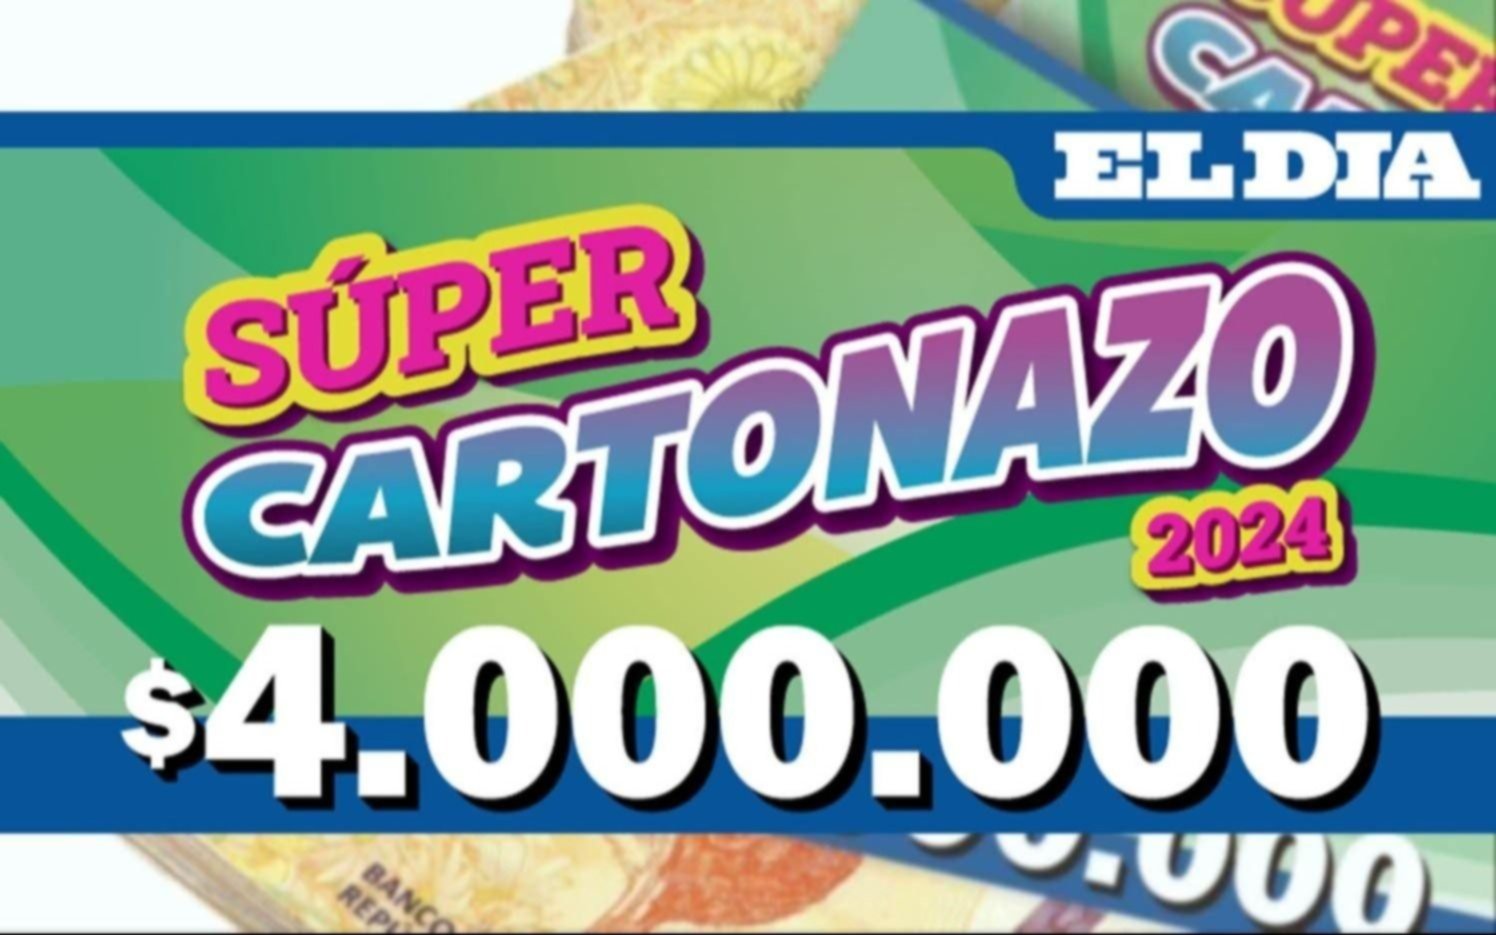 El Súper Cartonazo por $4.000.000 se define mañana: gran expectativa